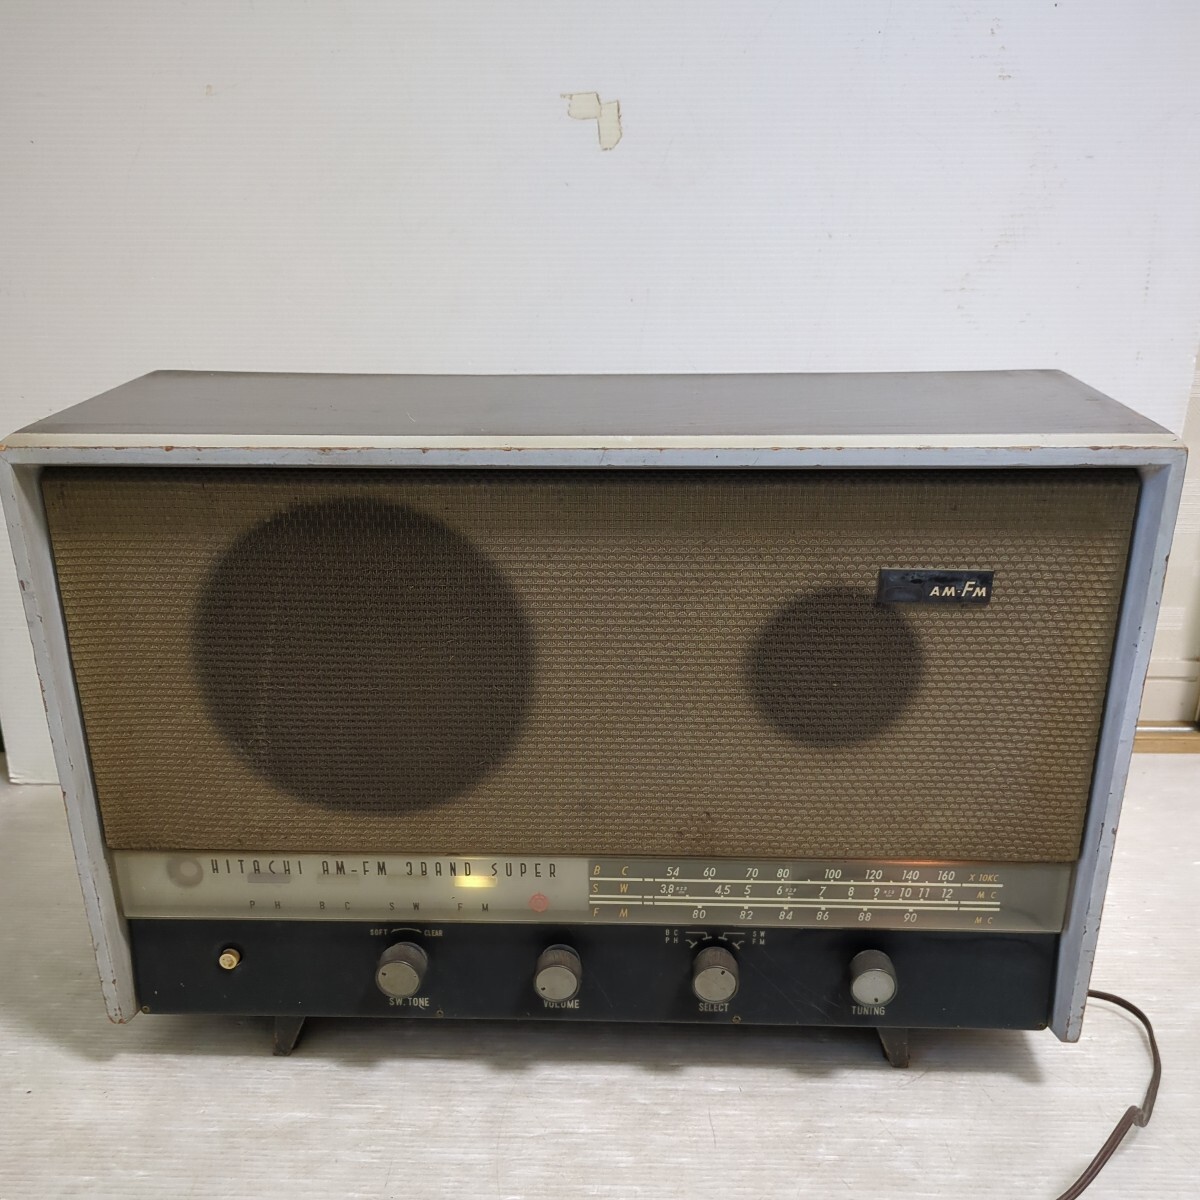  vacuum tube radio Hitachi monaF-530 3 band 